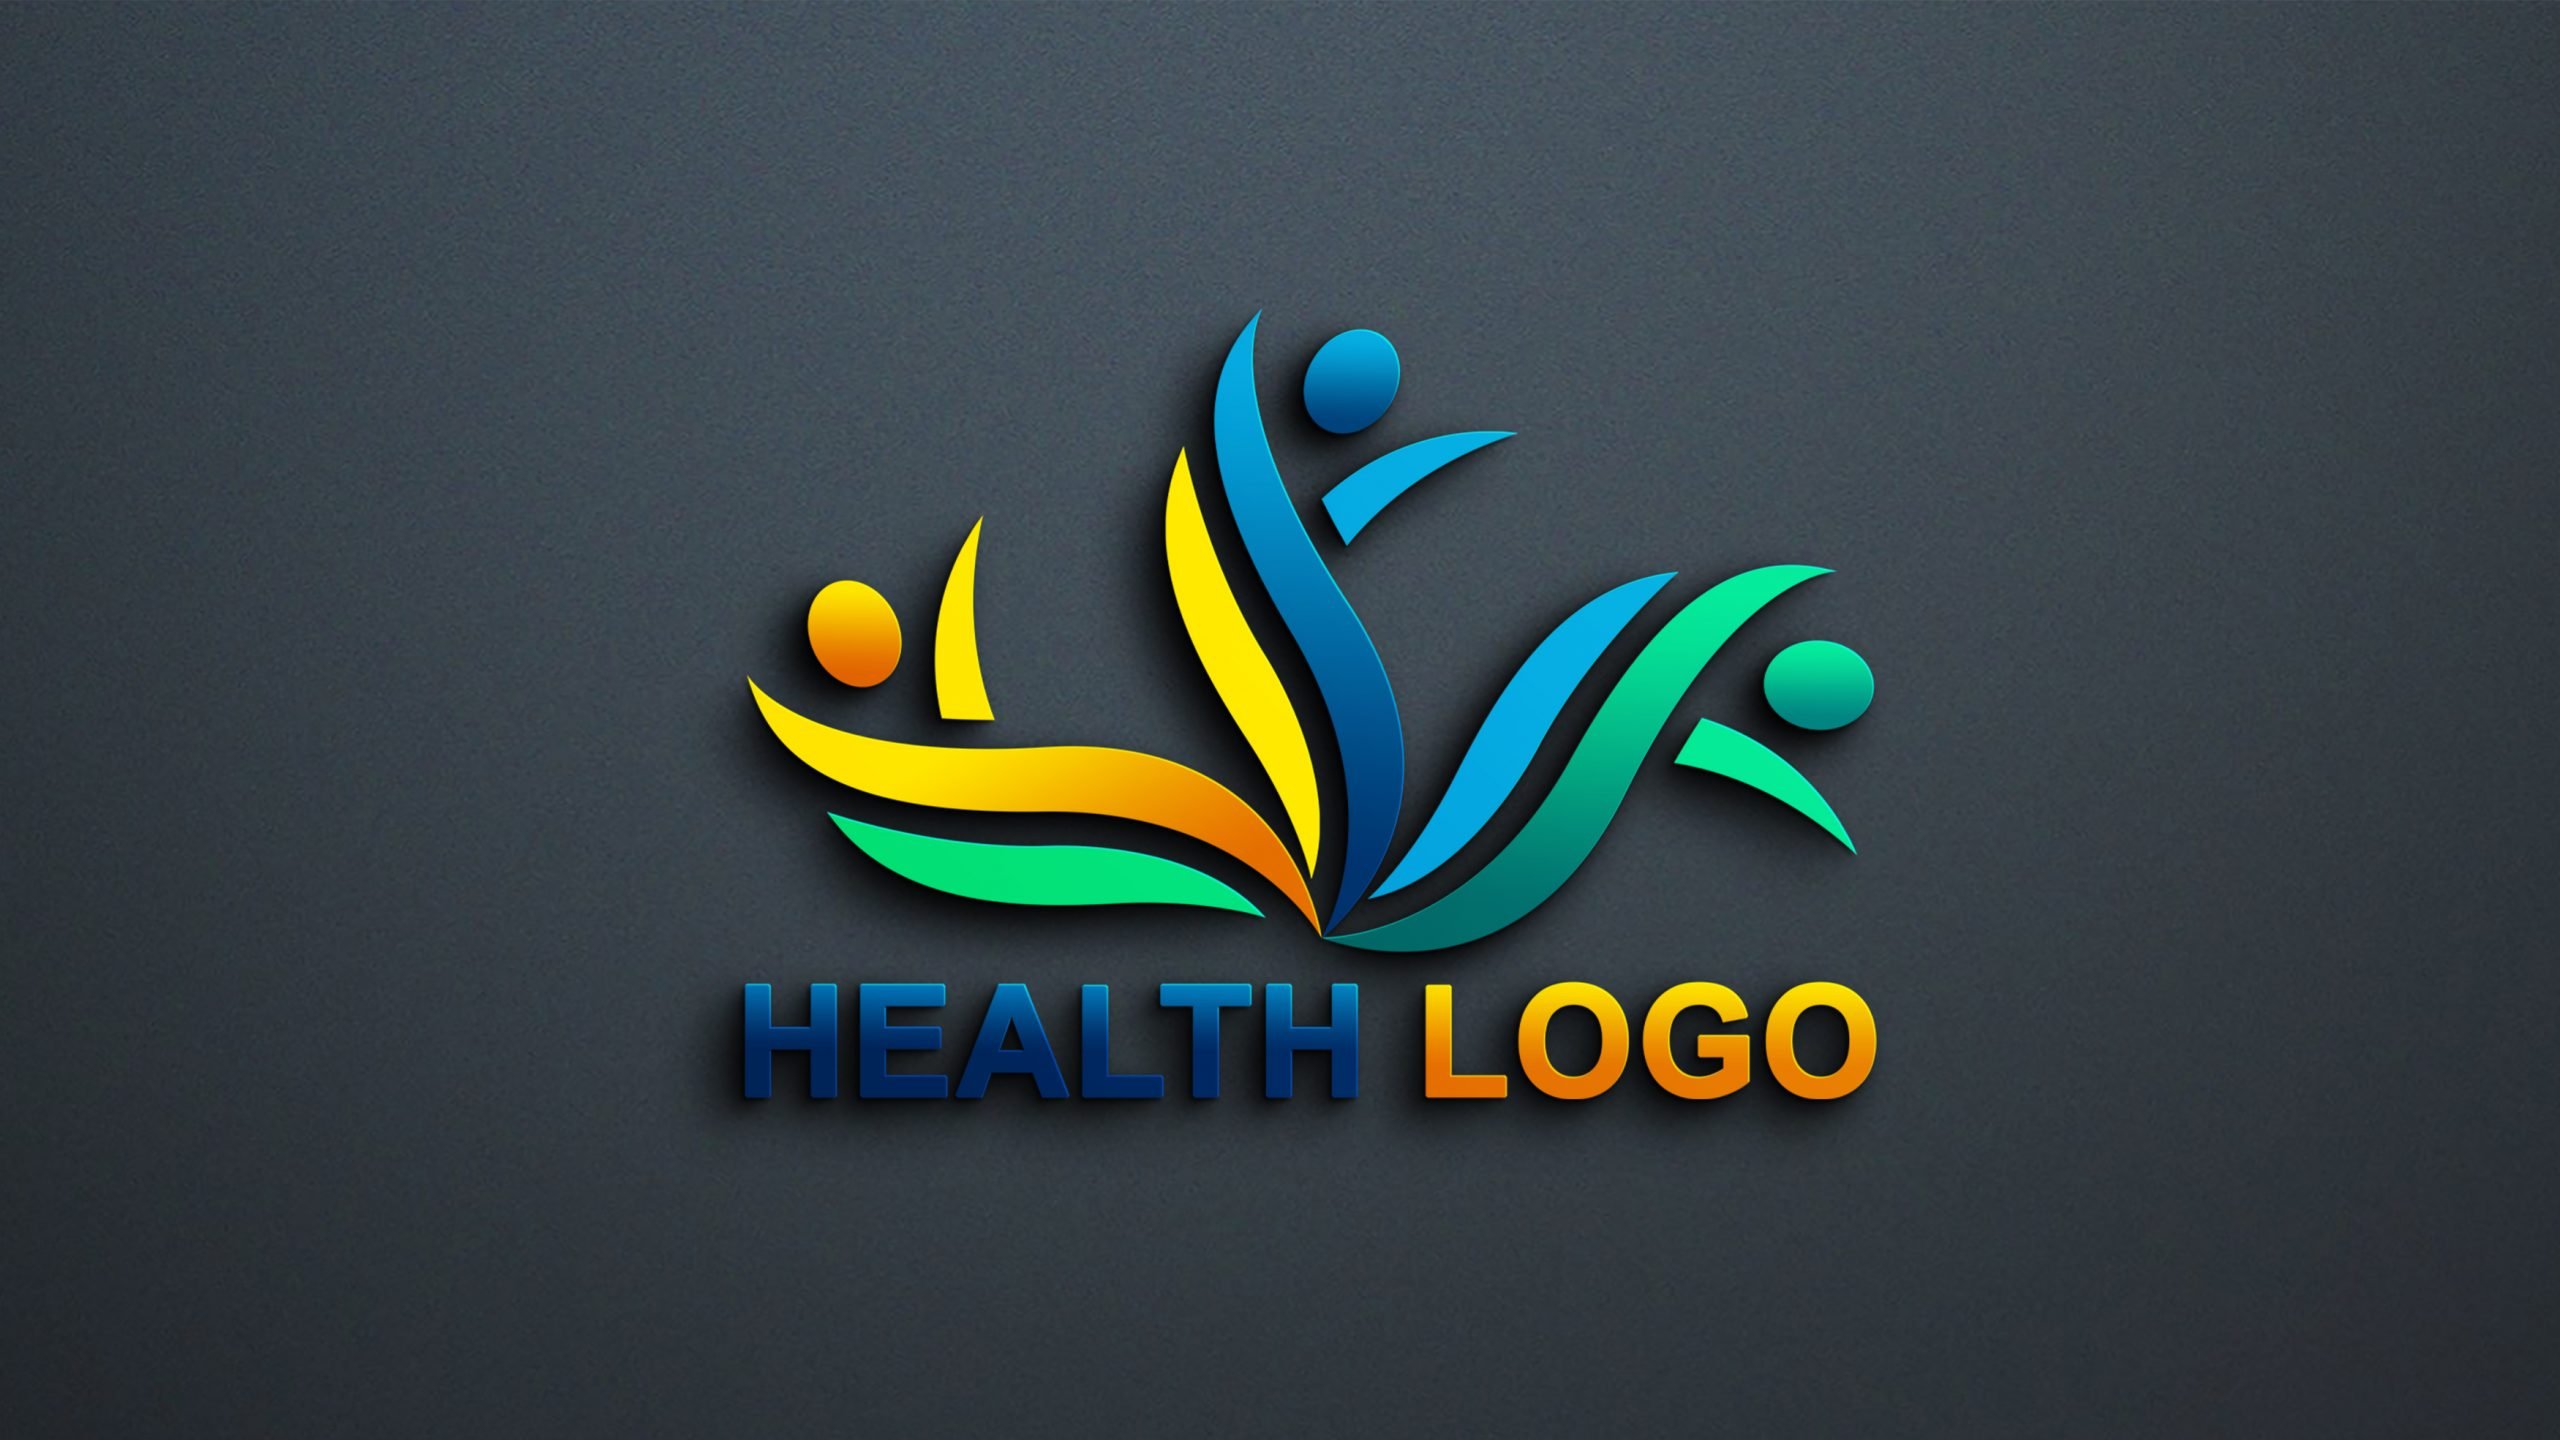 Health Logo Design Free Download